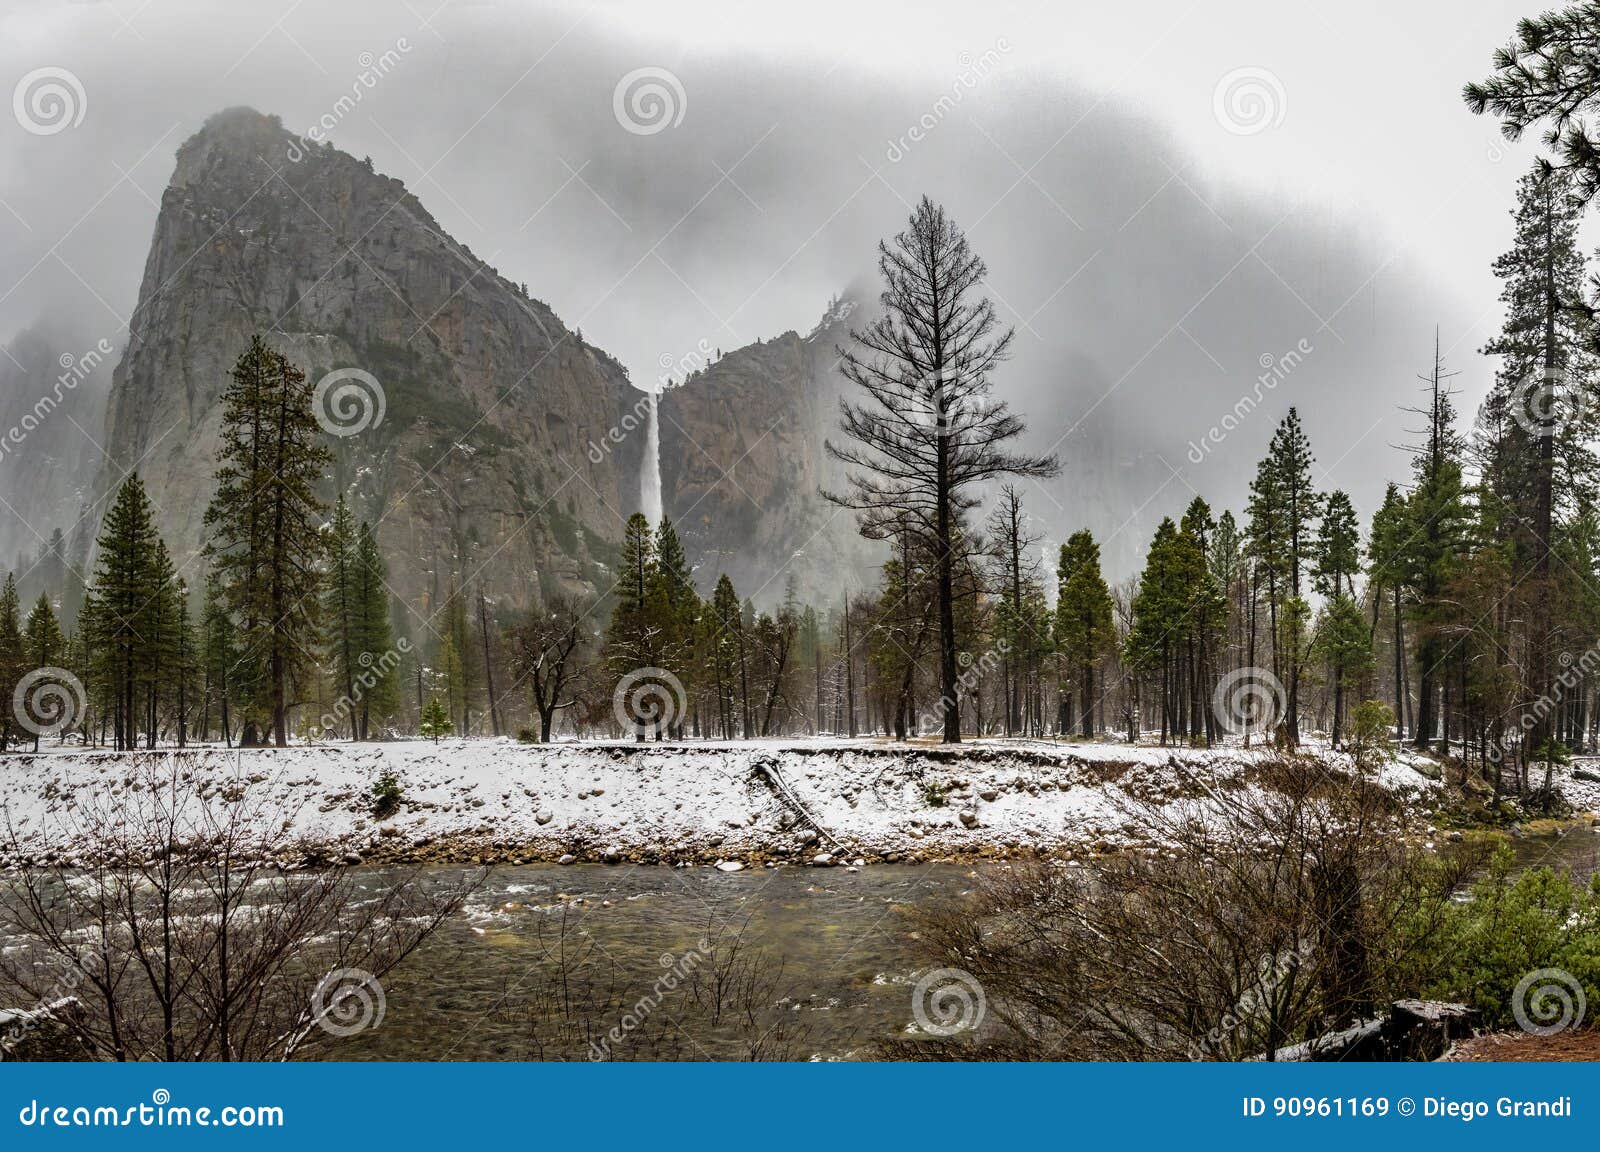 bridalveil fall at winter - yosemite national park, california, usa